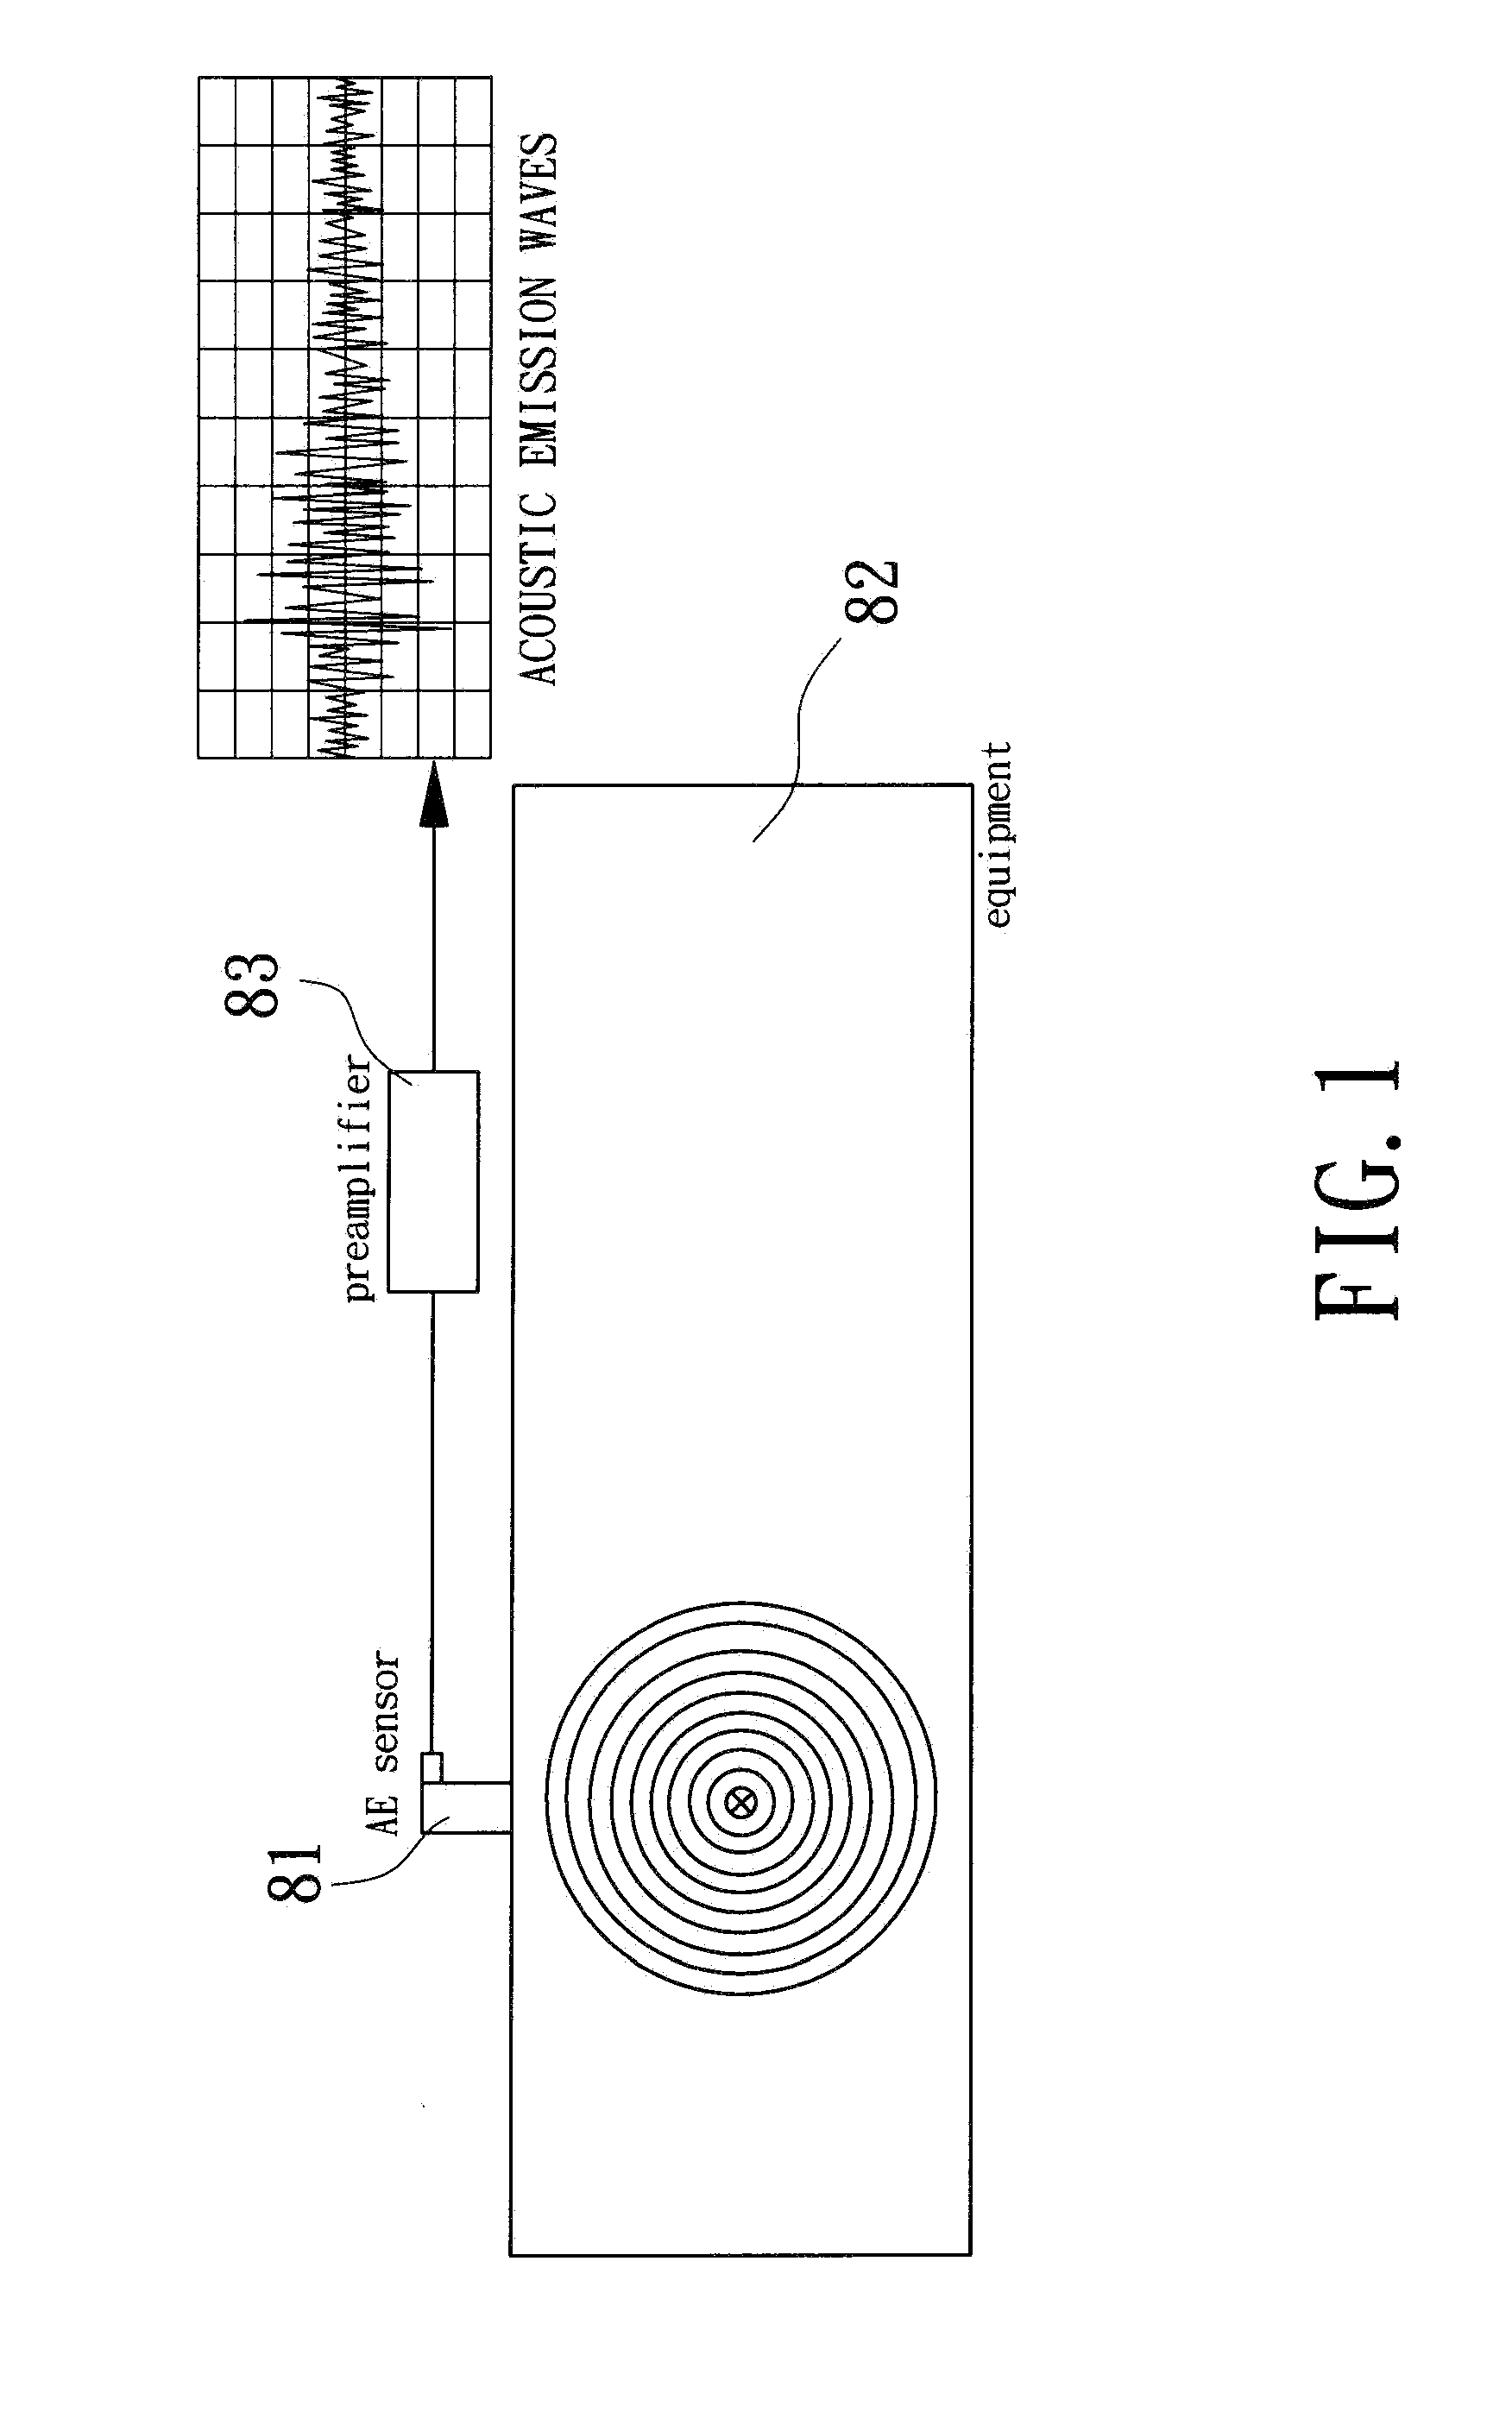 Simple partial discharge detector for power equipment using acoustic emission technique